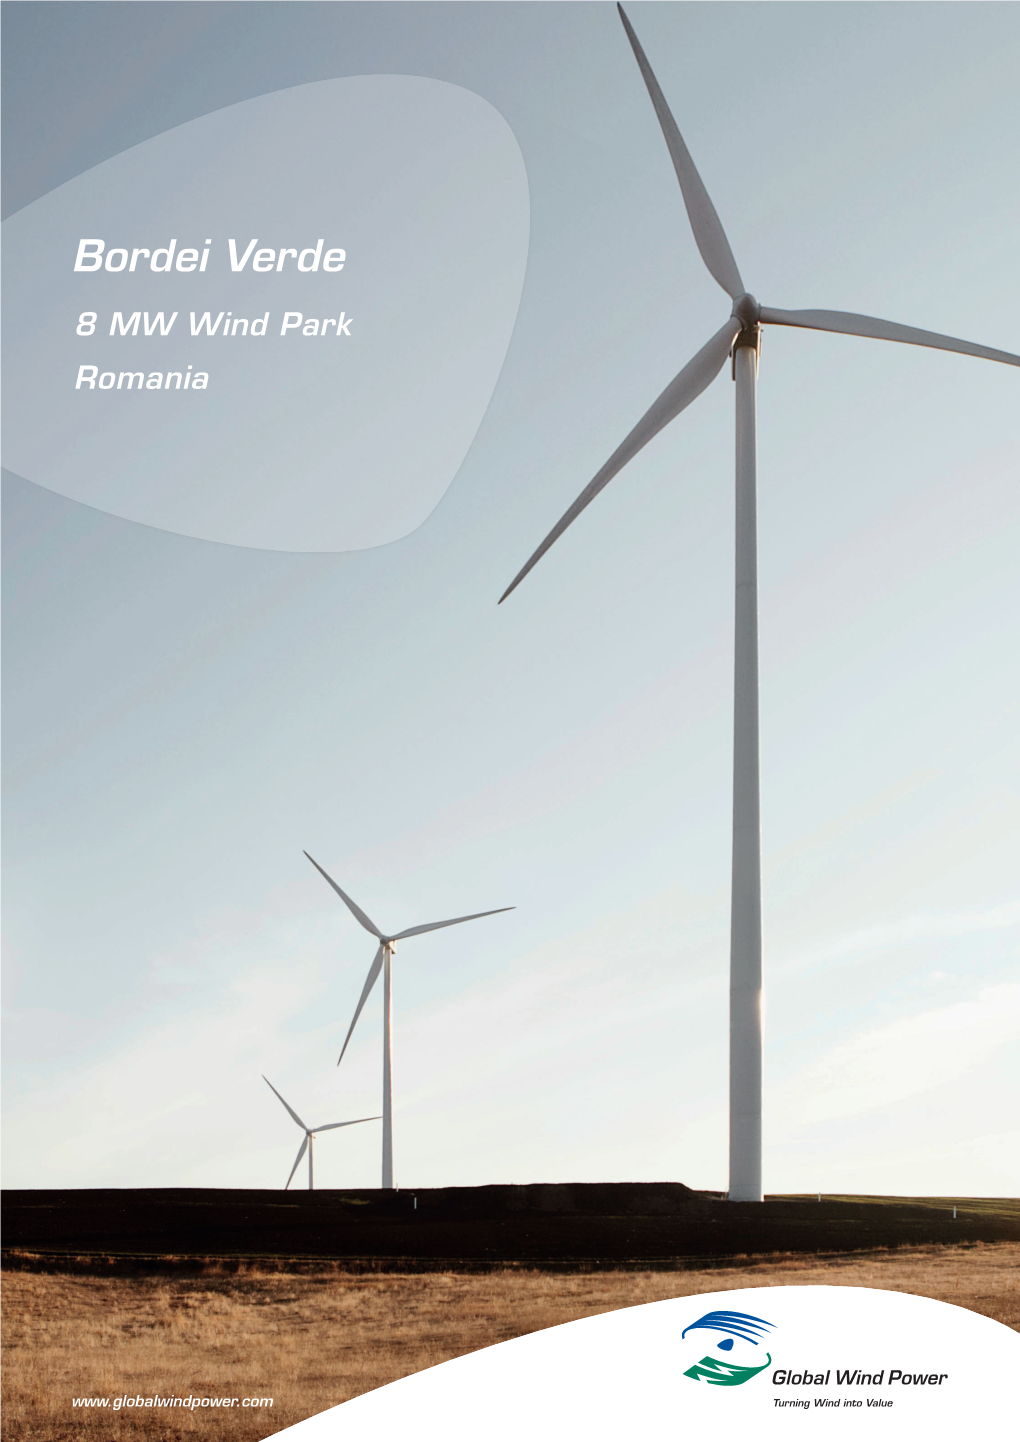 Bordei Verde 8 MW Wind Park Romania